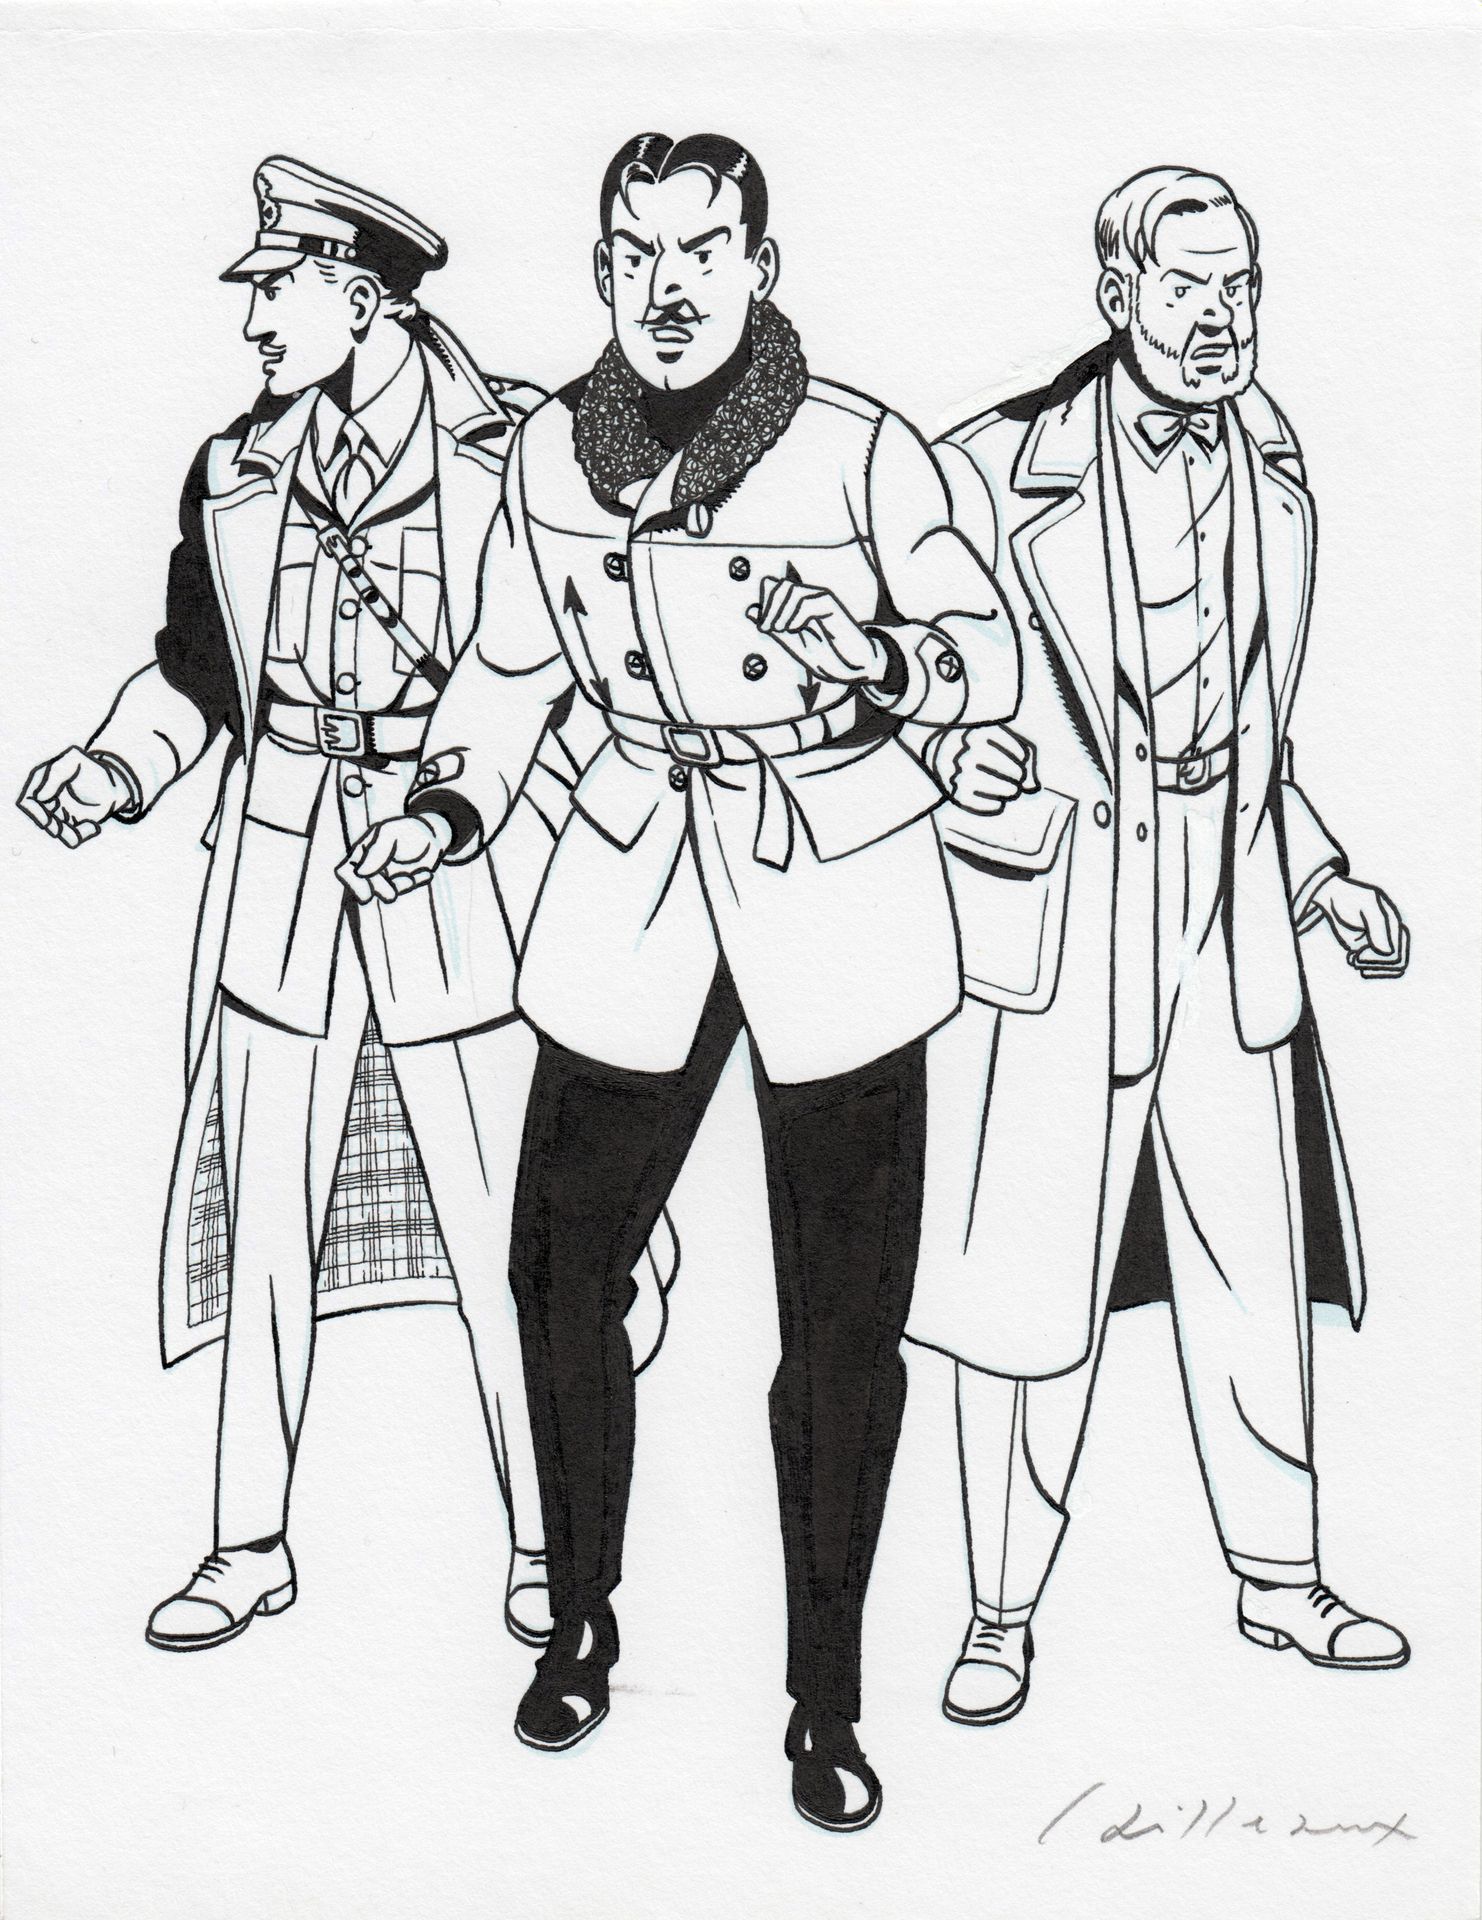 CAILLEAUX, Christian (1967) Ilustración Blake, Mortimer y Olrik (según Jacobs).
&hellip;